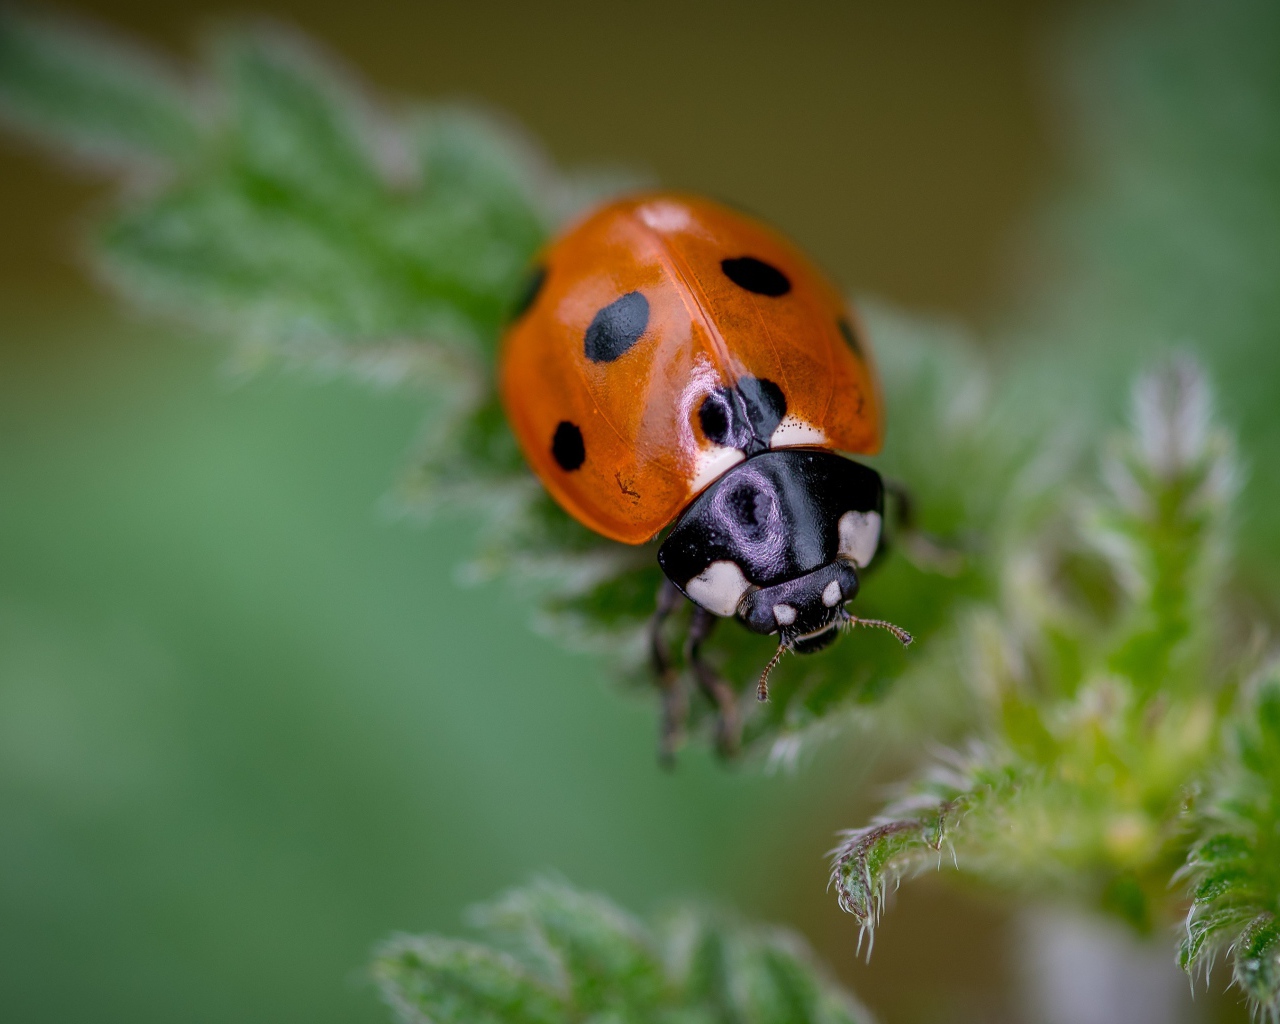 Little ladybug on a green leaf